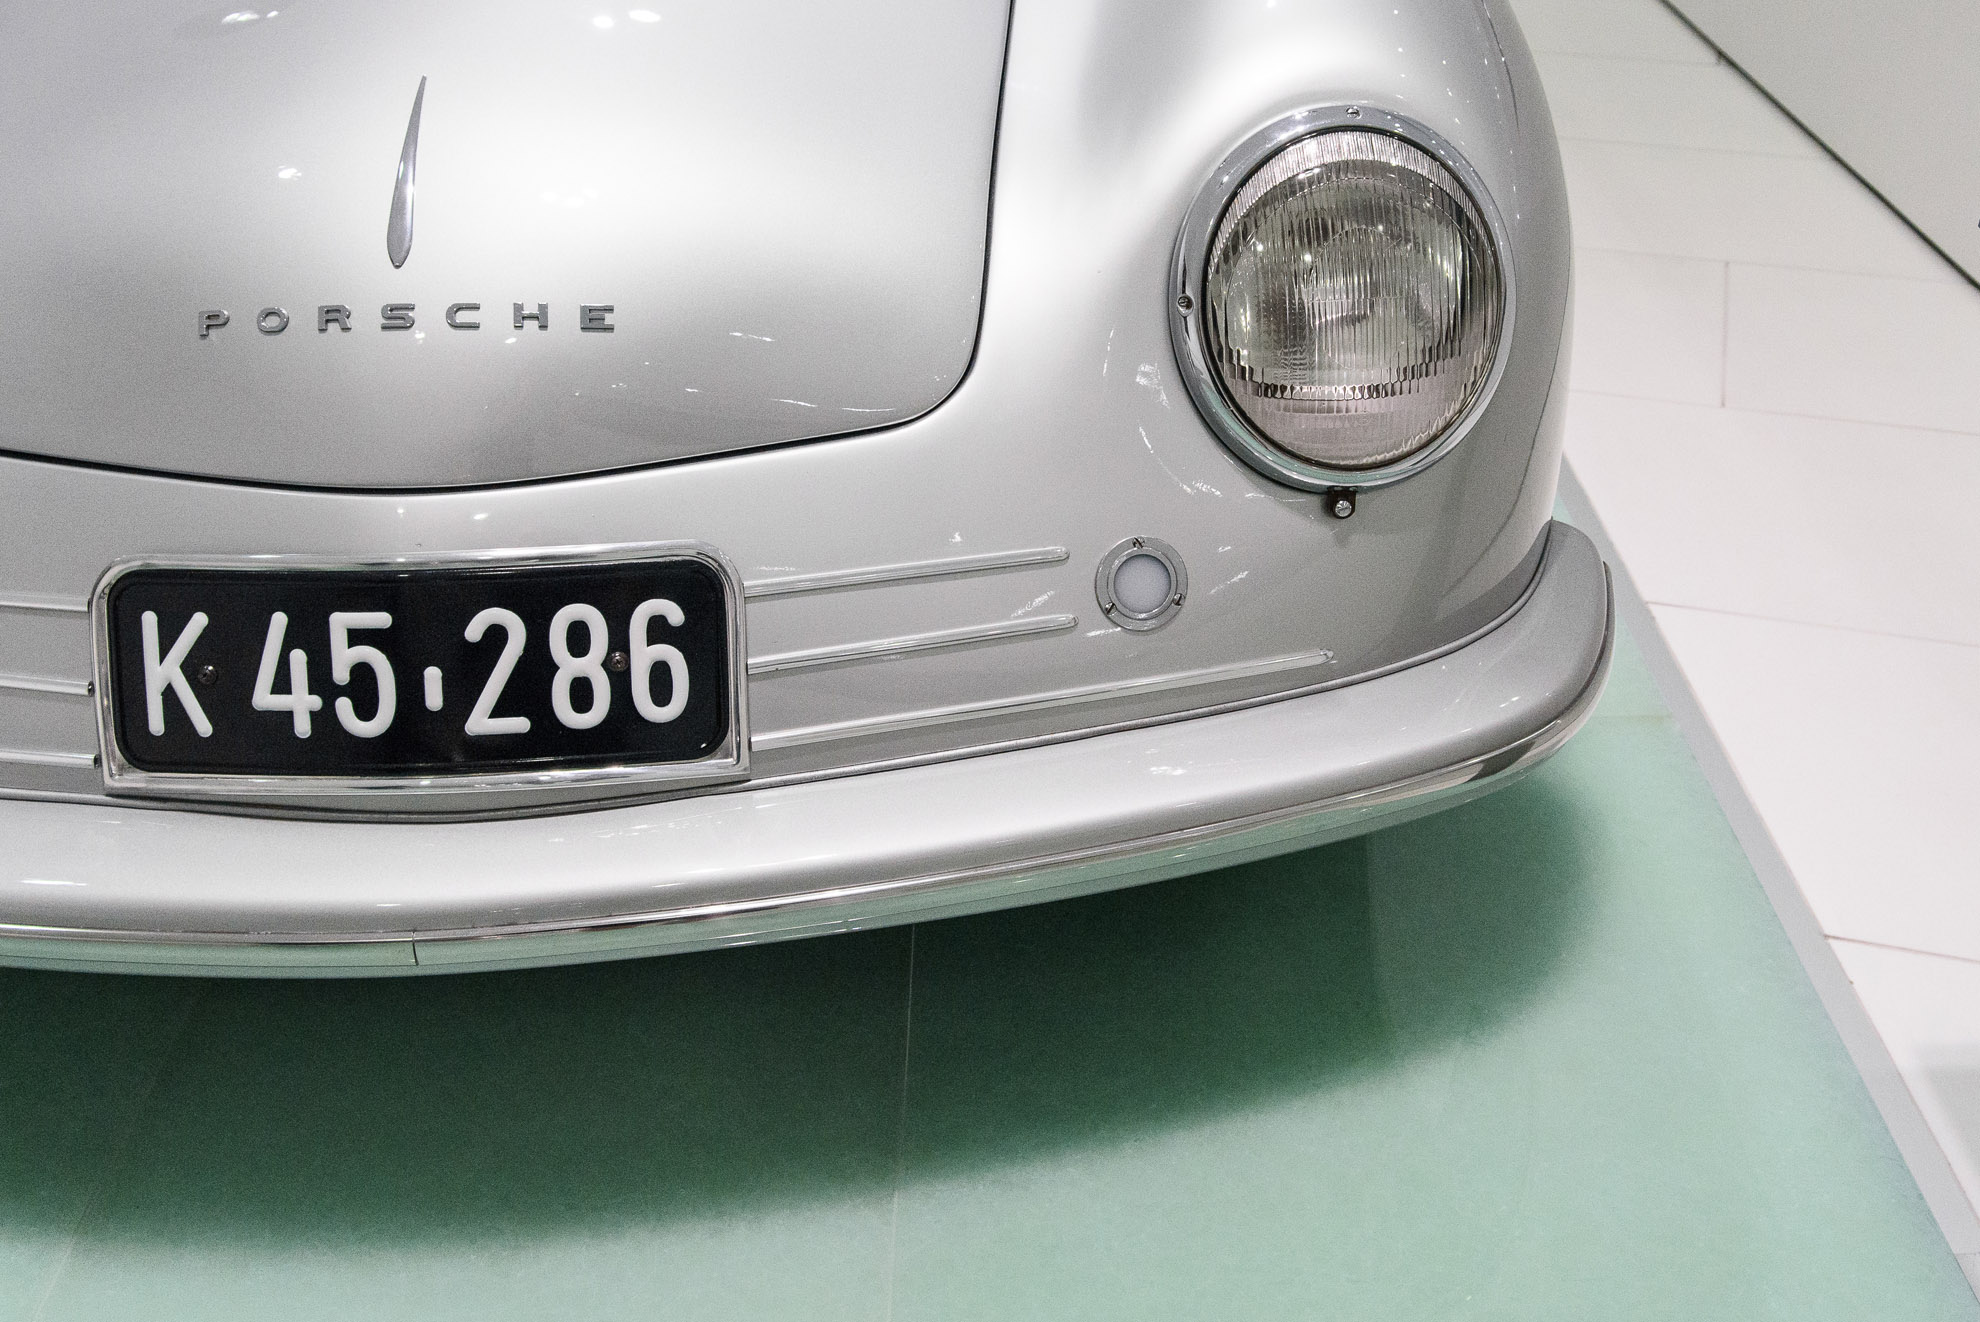 Porsche 356/1 Roadster